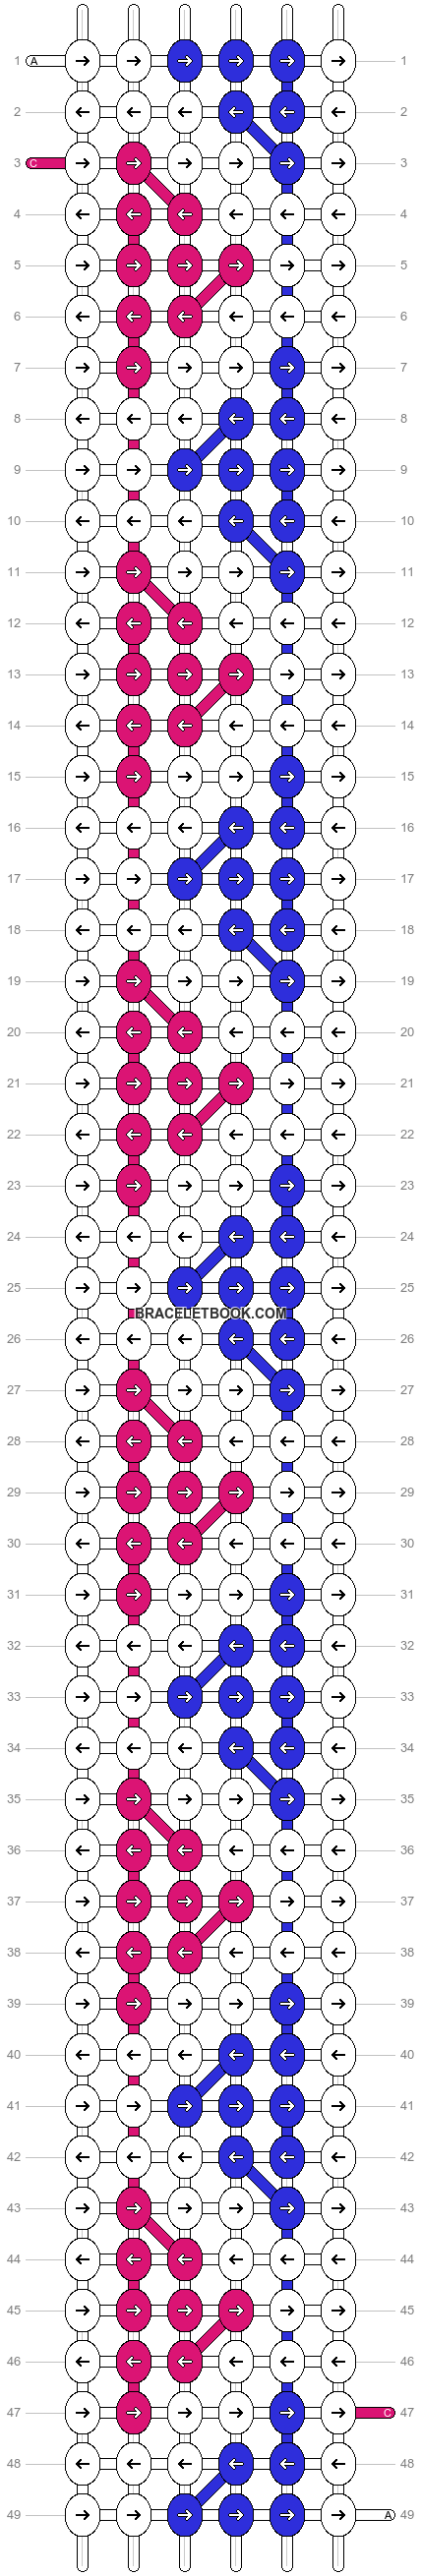 Alpha pattern #17842 variation #2594 pattern